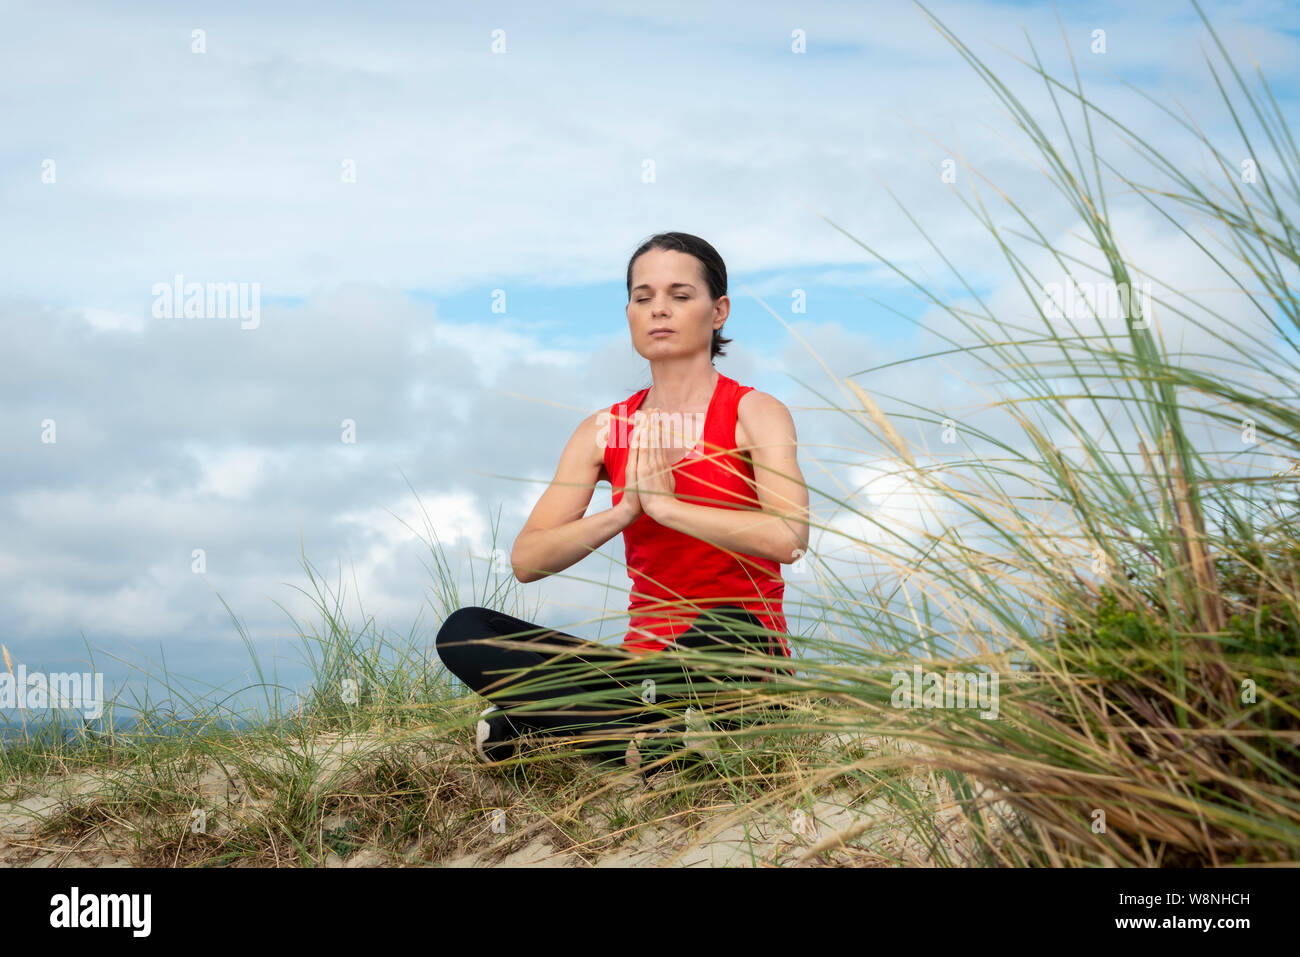 Woman sitting crossed legged and meditating, practicing yoga outside. Stock Photo